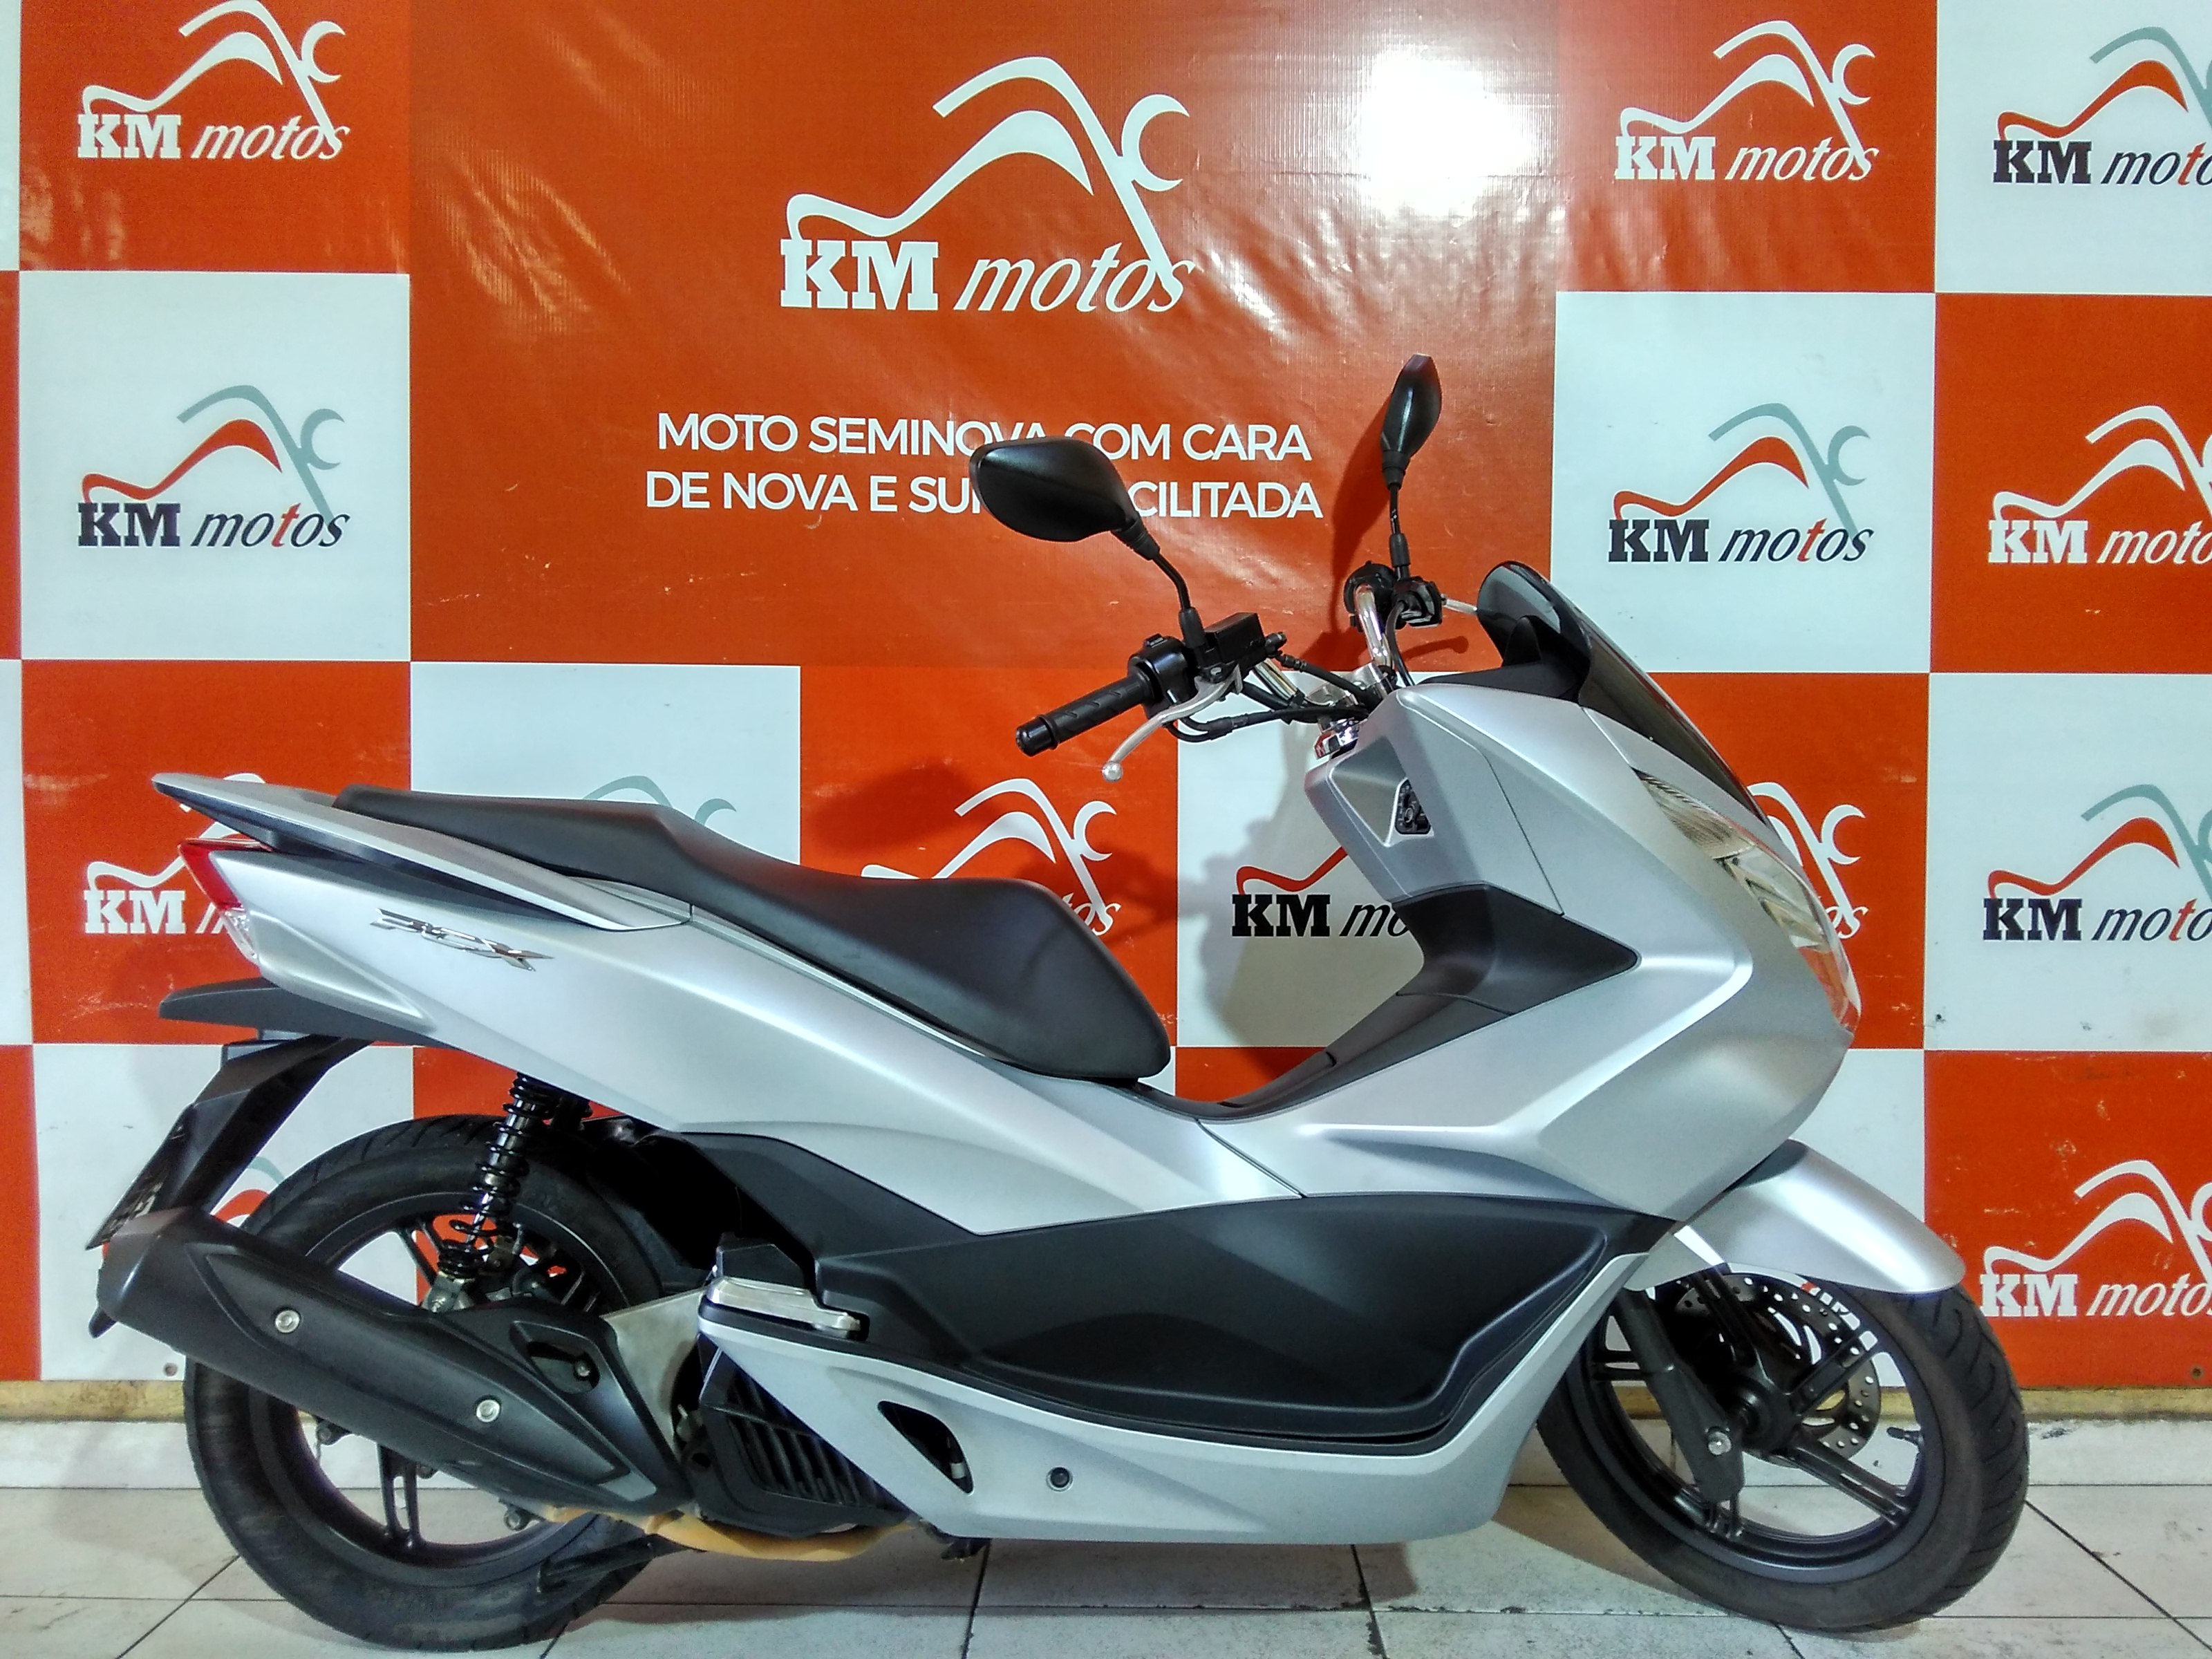 Honda Pcx 150 Prata 2018 Km Motos Sua Loja De Motos Semi Novas 3192